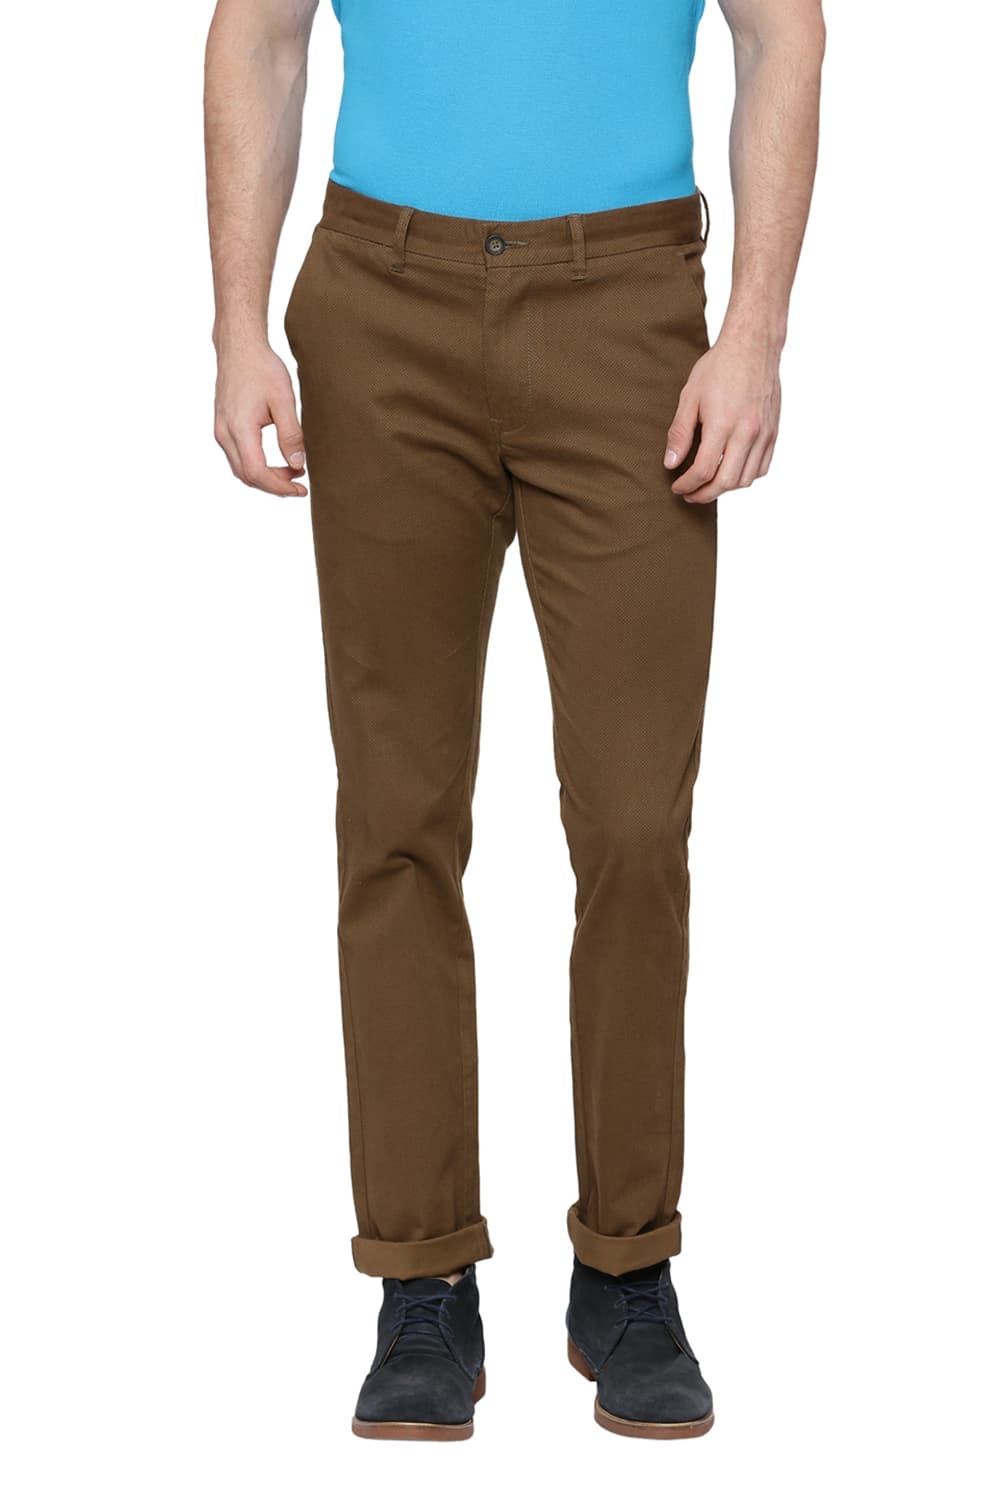 Basics | Basics Skinny Fit Kangaroo Brown Printed Stretch Trouser